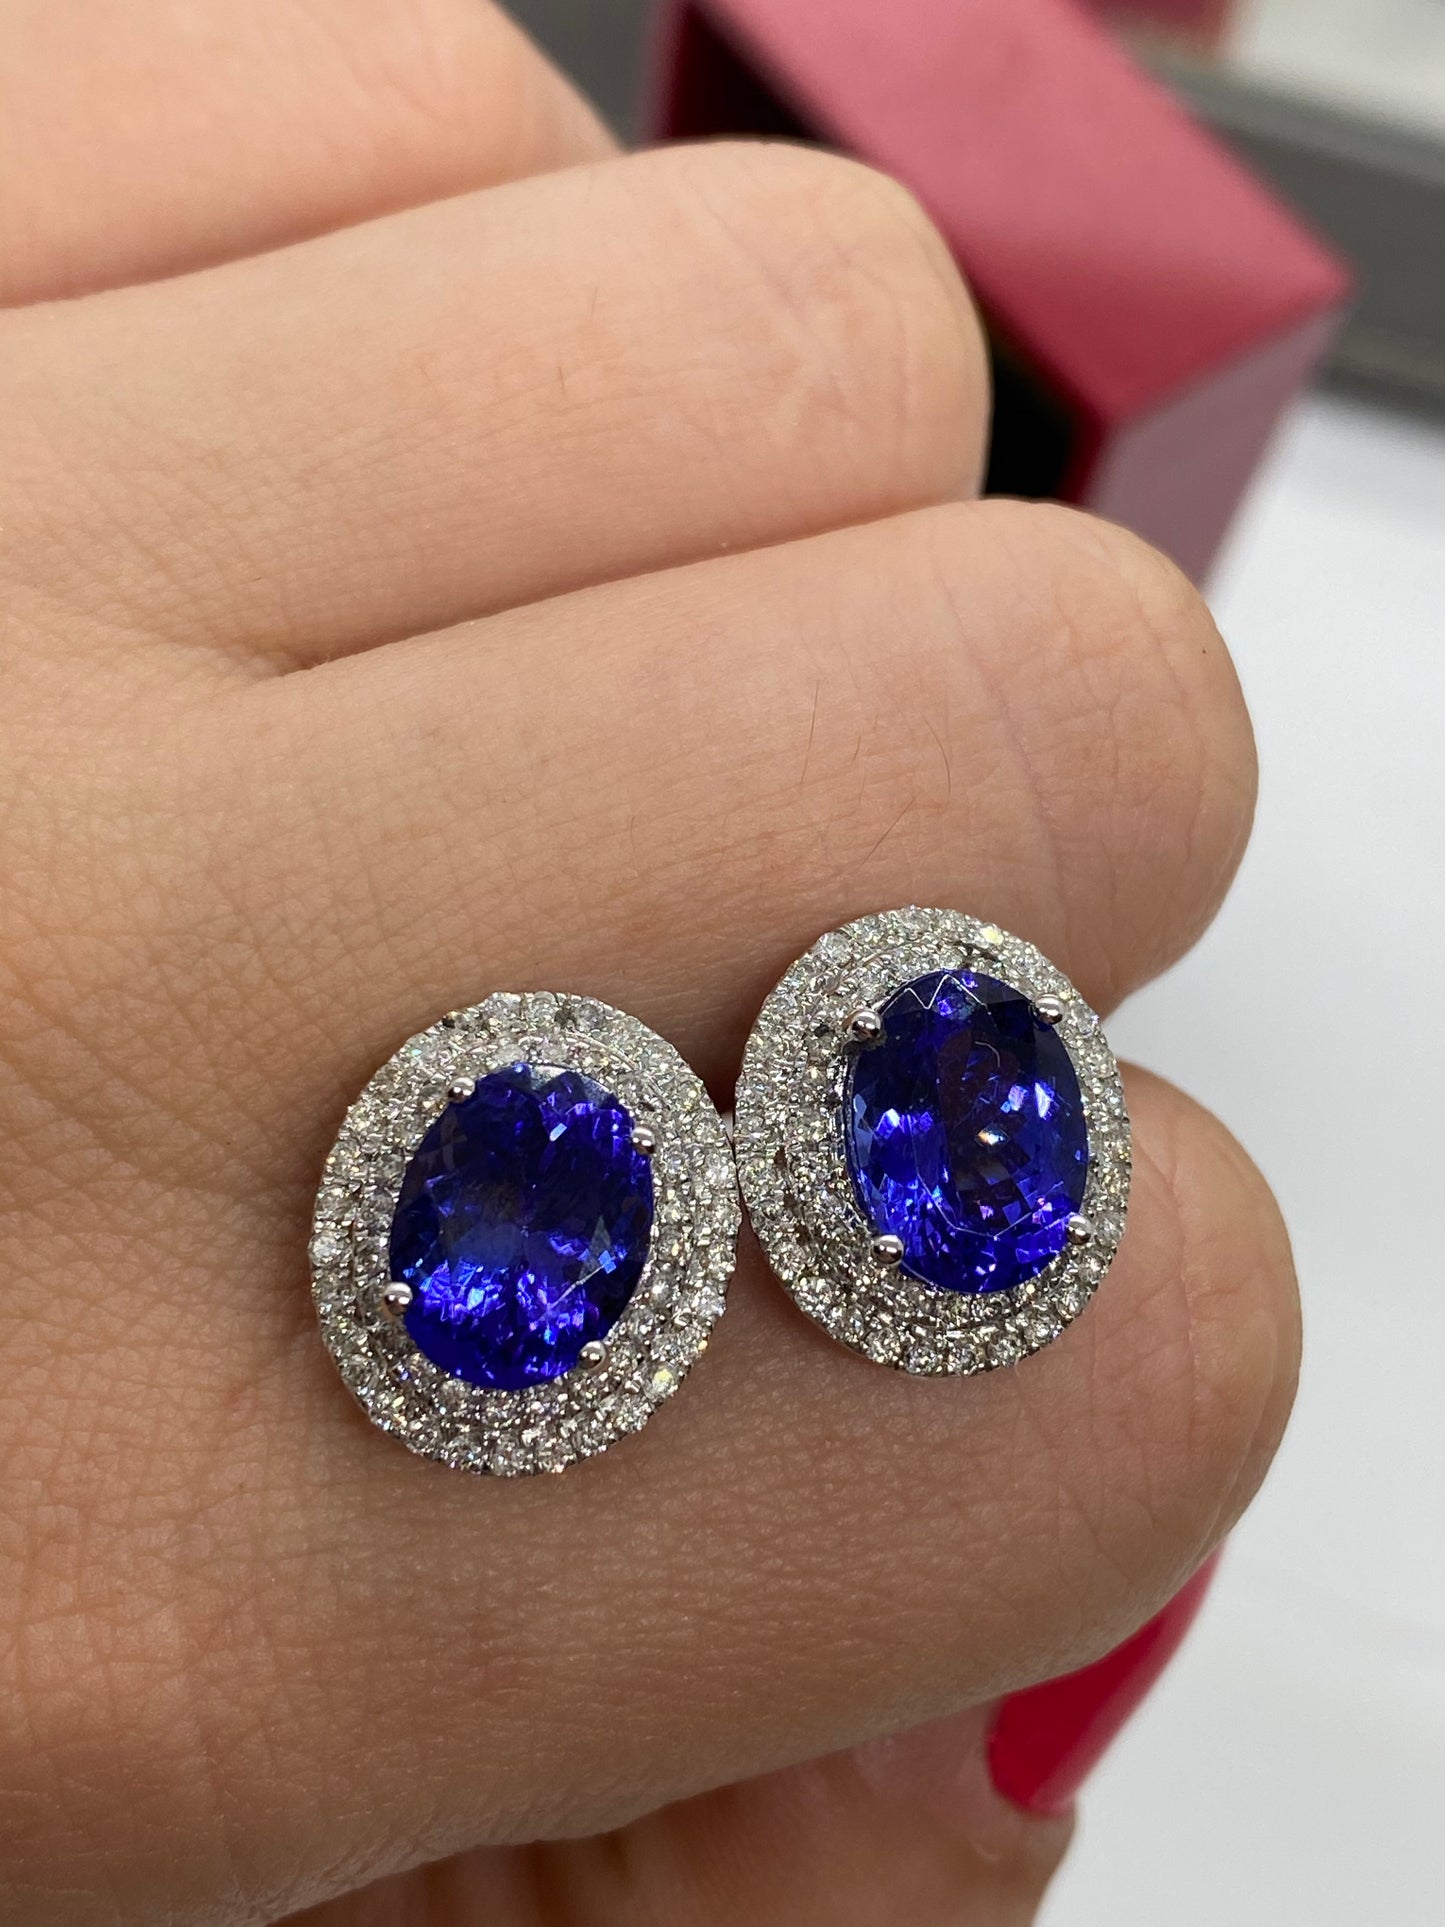 Tanzanite Earring E10267 - Royal Gems and Jewelry